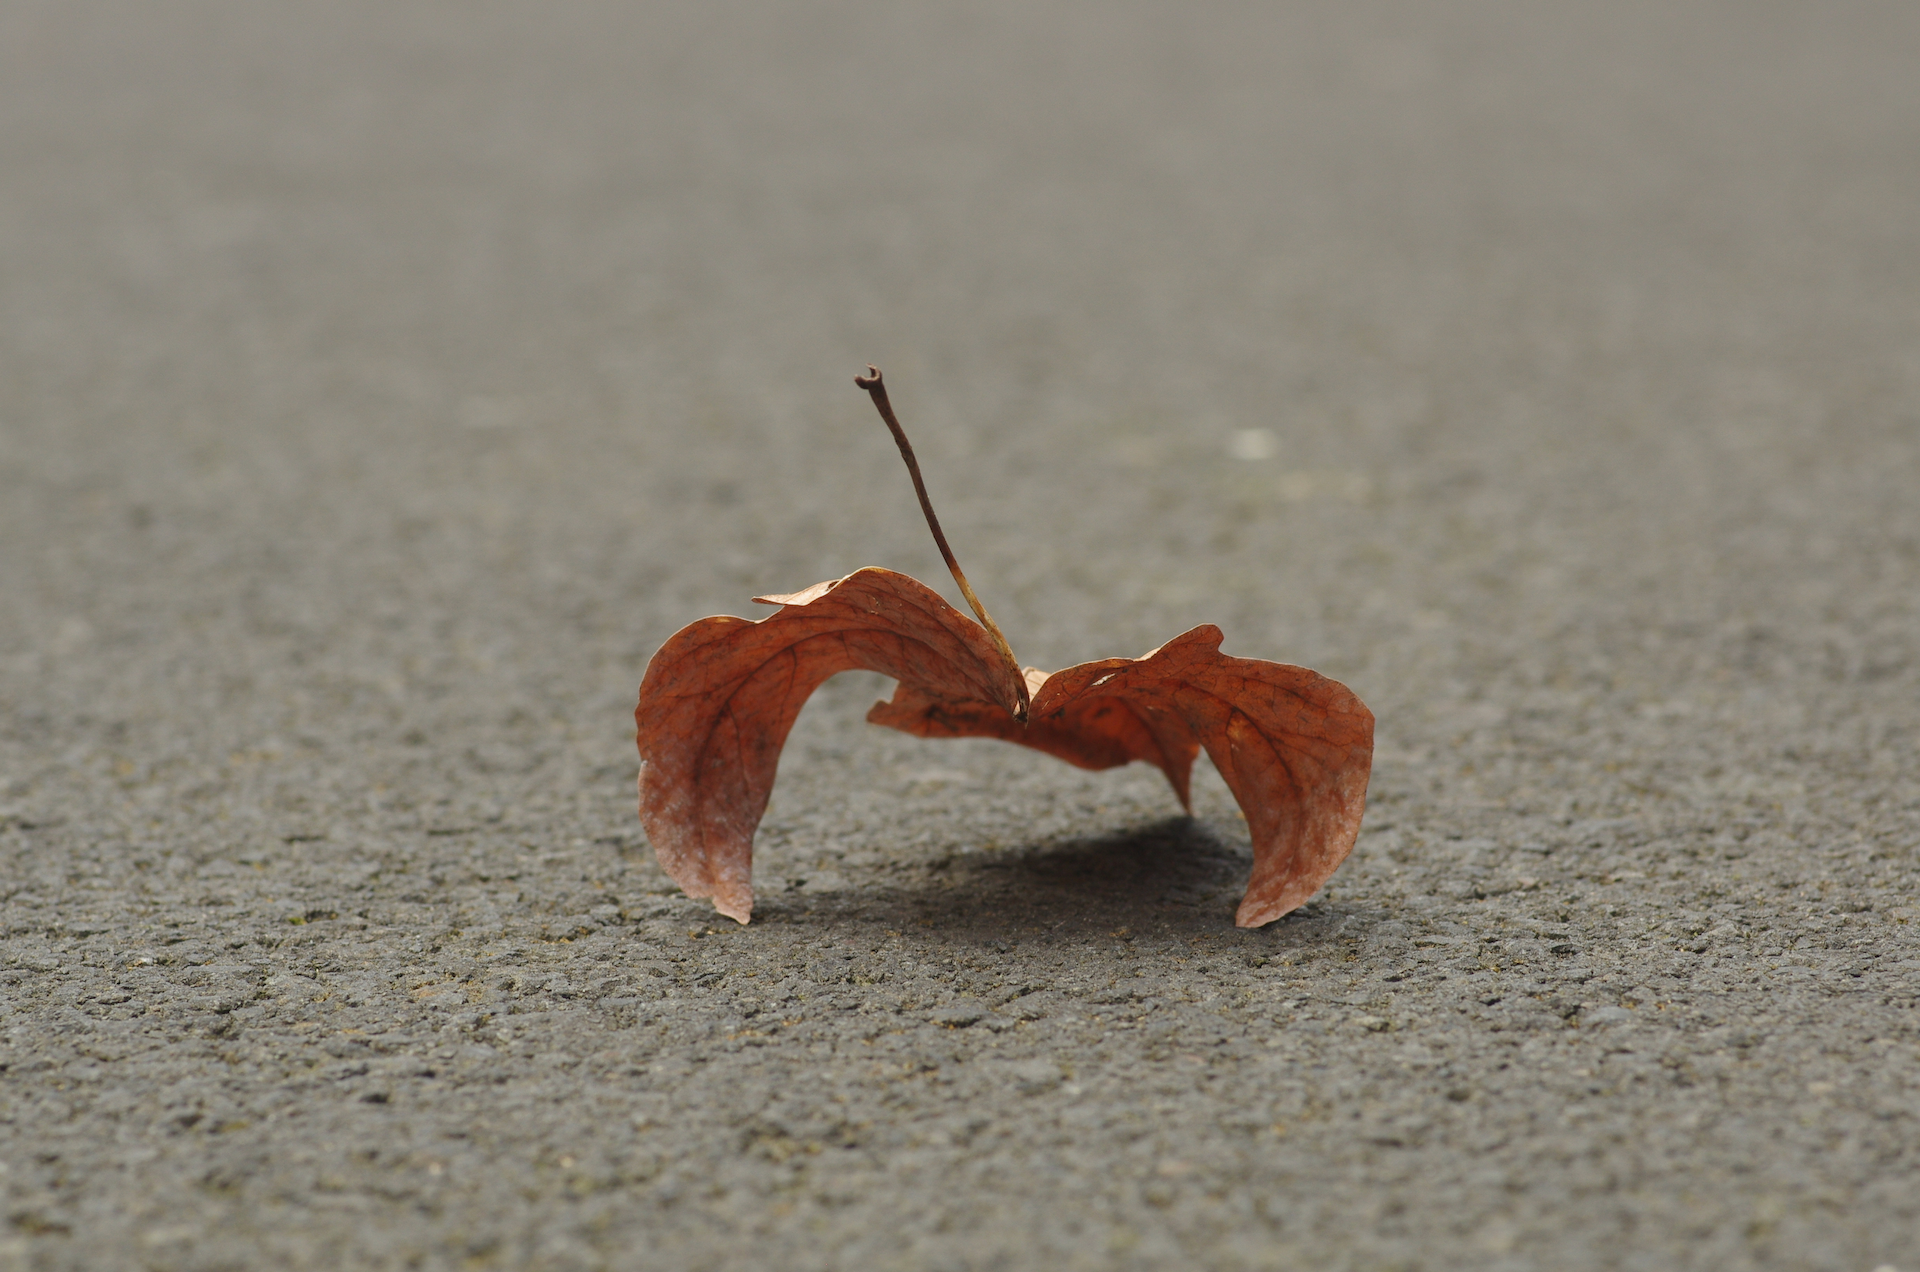 A leaf that looks like a crab